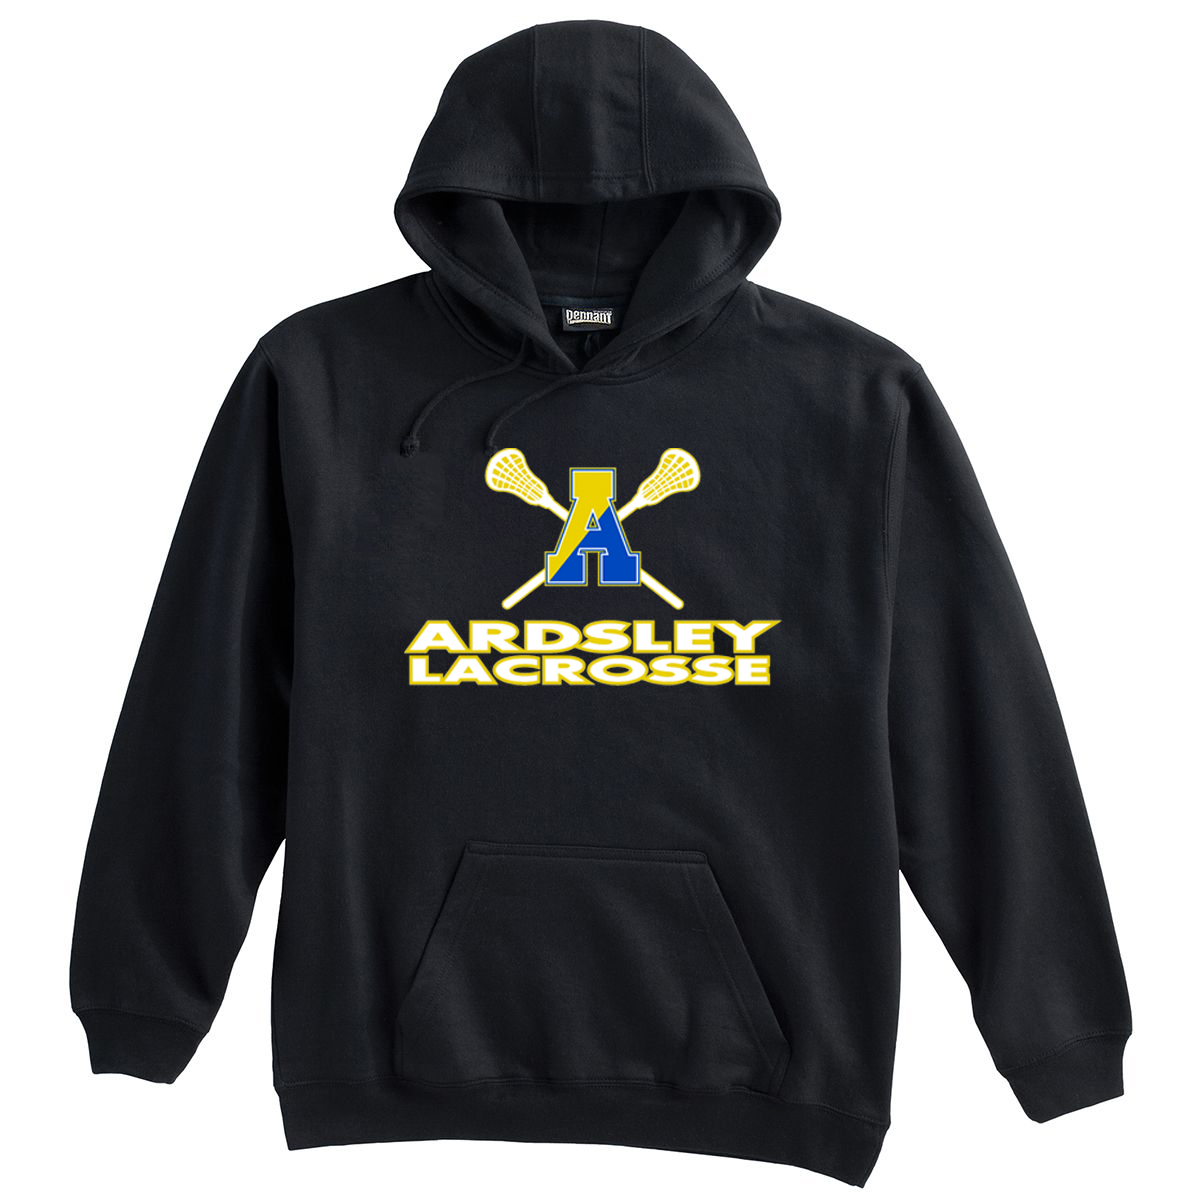 Ardsley High School Lacrosse Sweatshirt